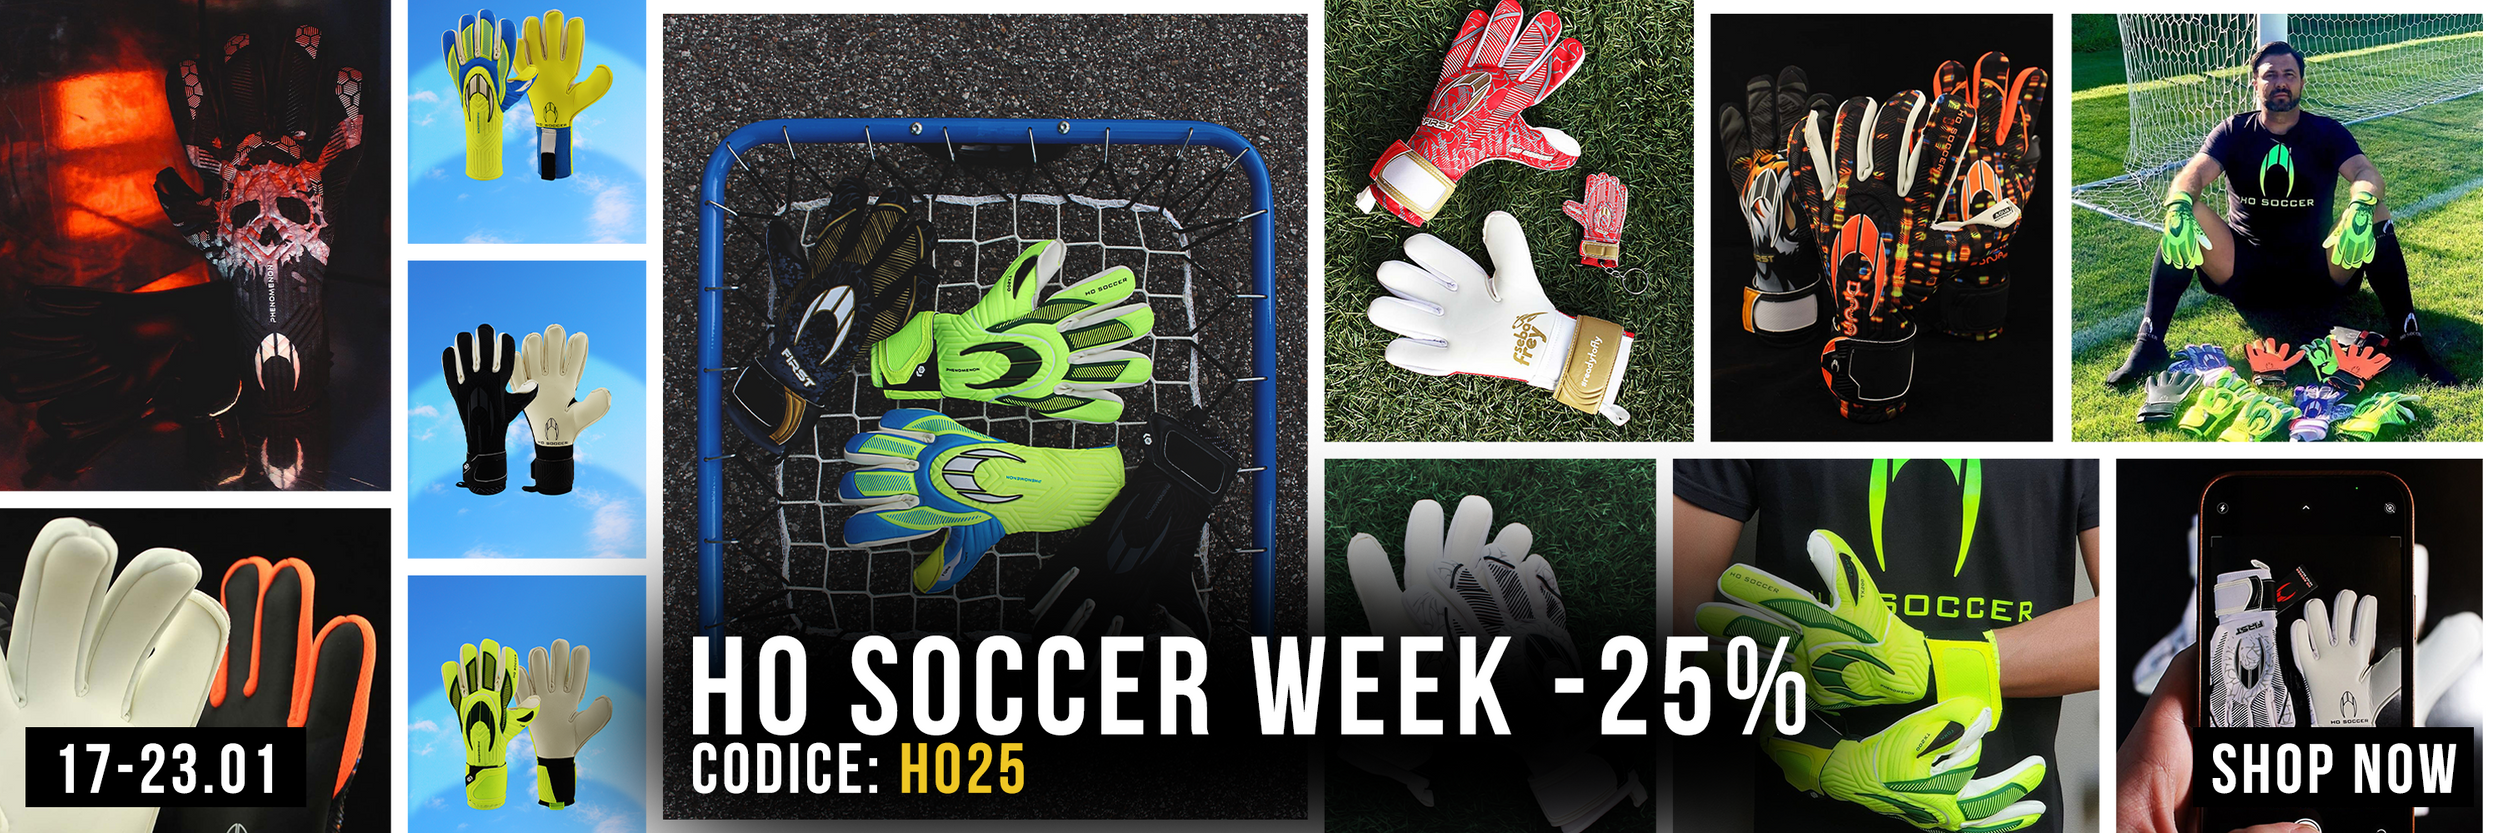 ho soccer WEEK -25%